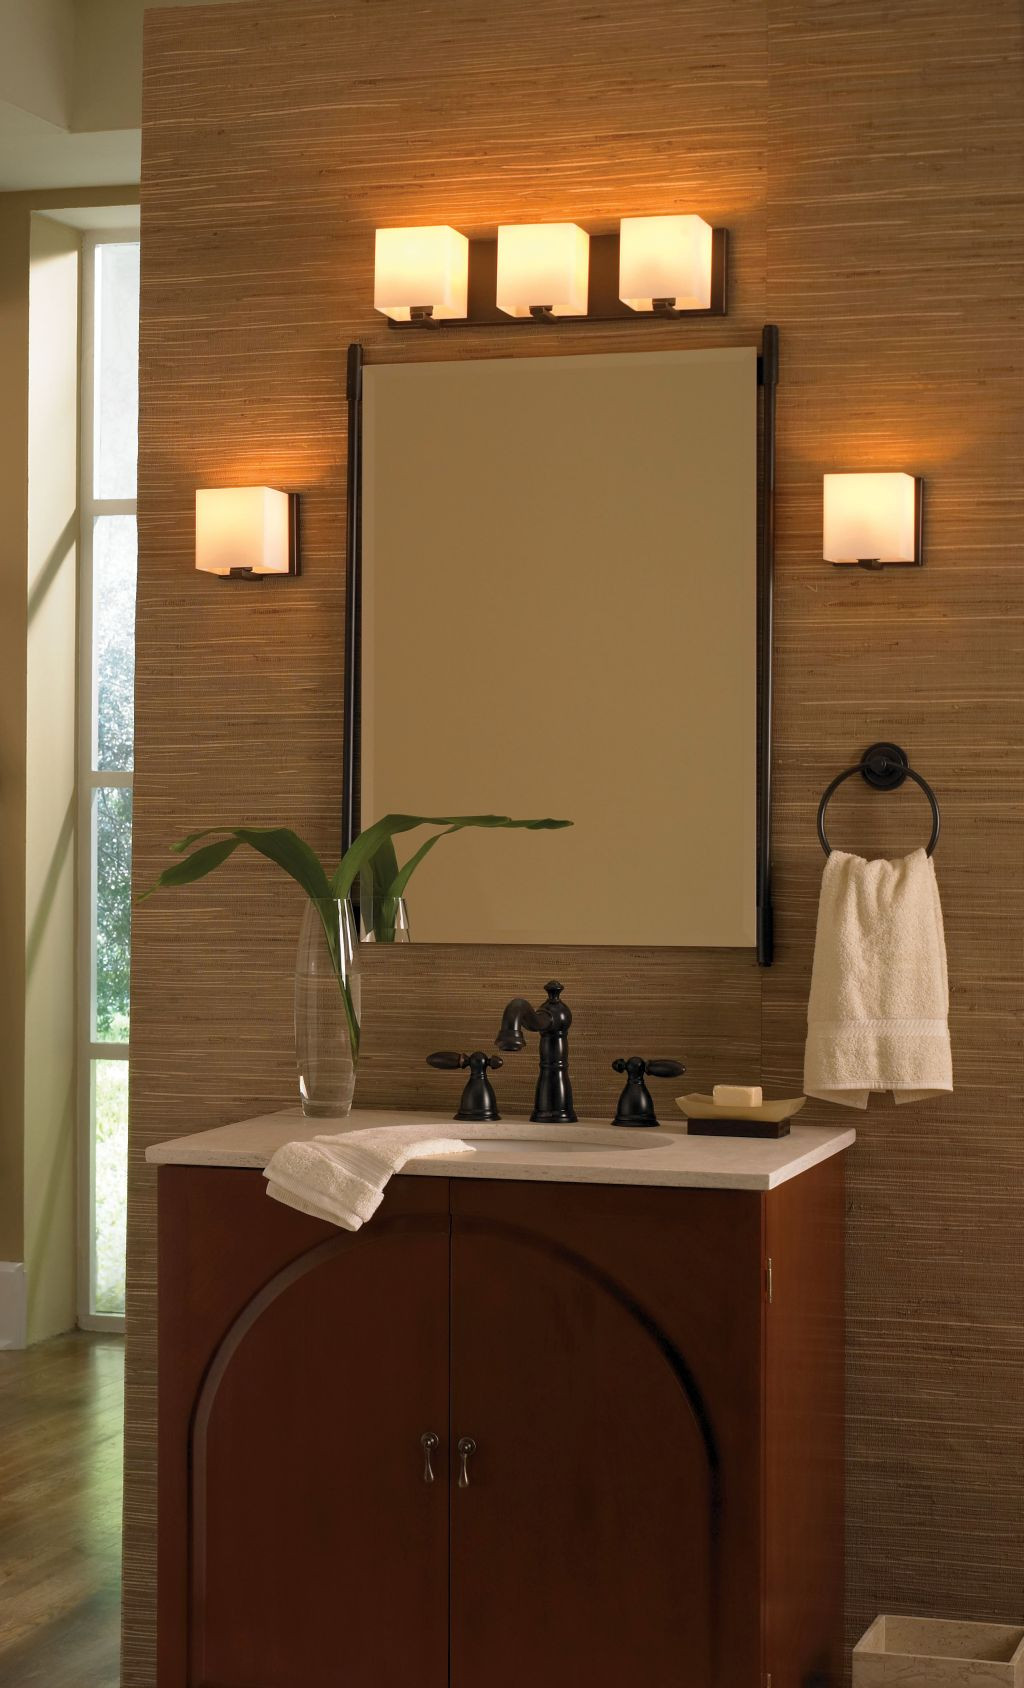 Retro Lighting For Bathrooms
 retro Bathroom vanity lighting ideas